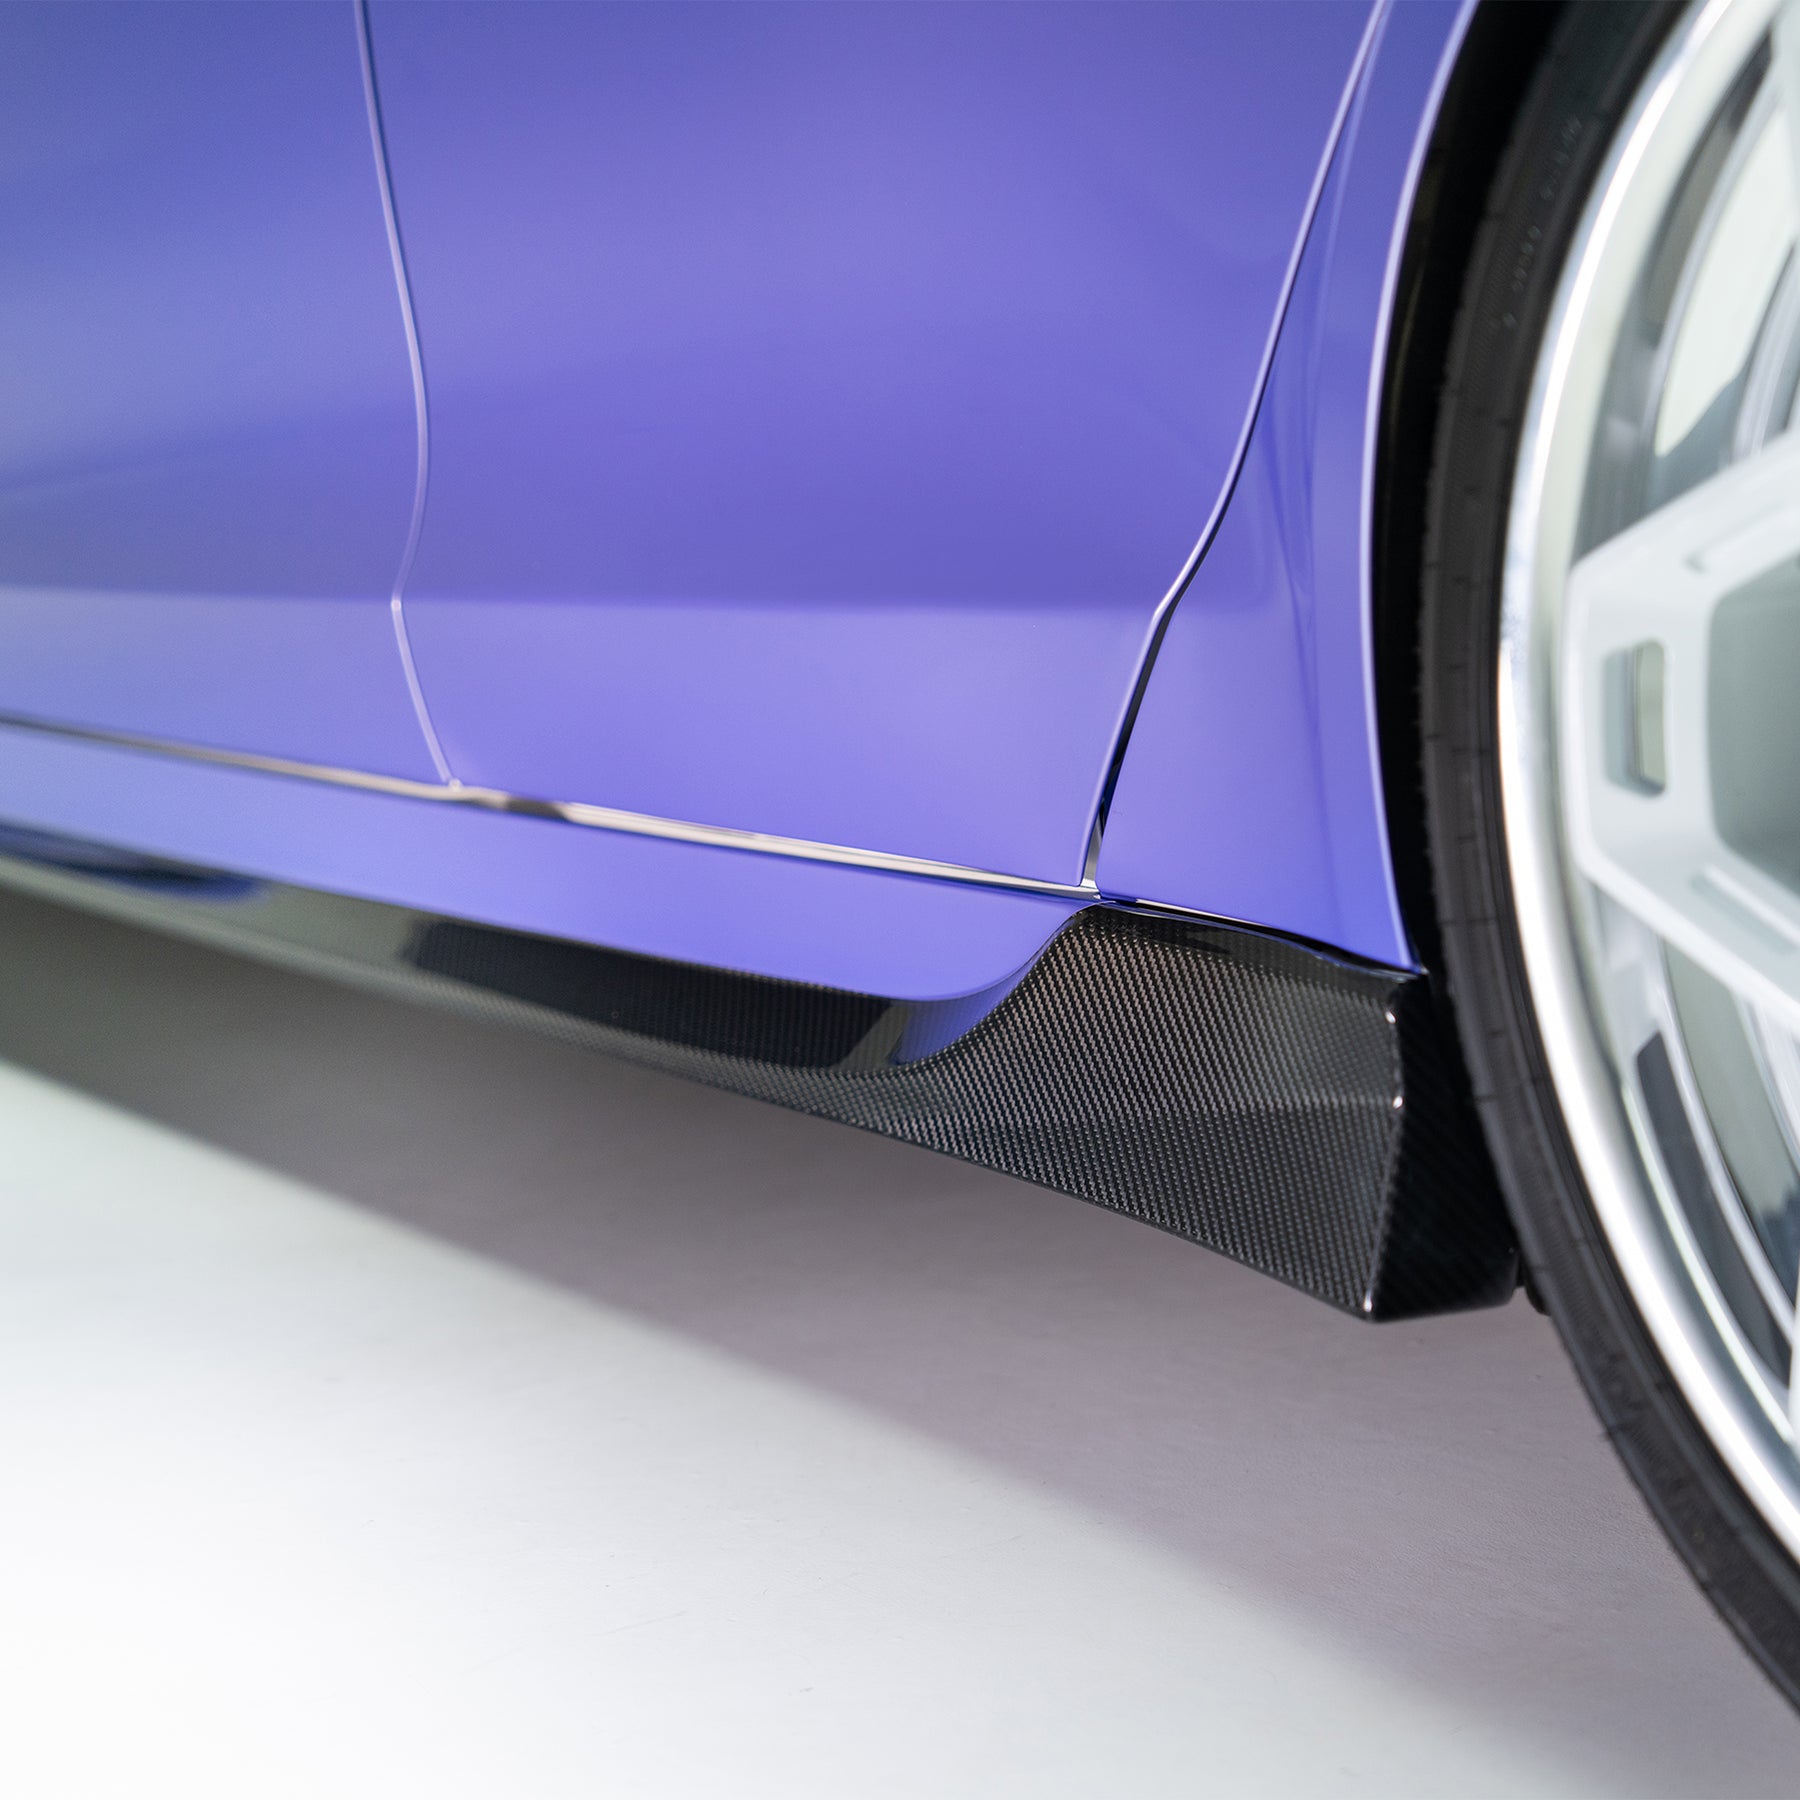 VRS Tesla Model S Plaid Aero Side Skirts Carbon Fiber PP 2x2 Glossy - Vorsteiner Wheels  -  - [tags]